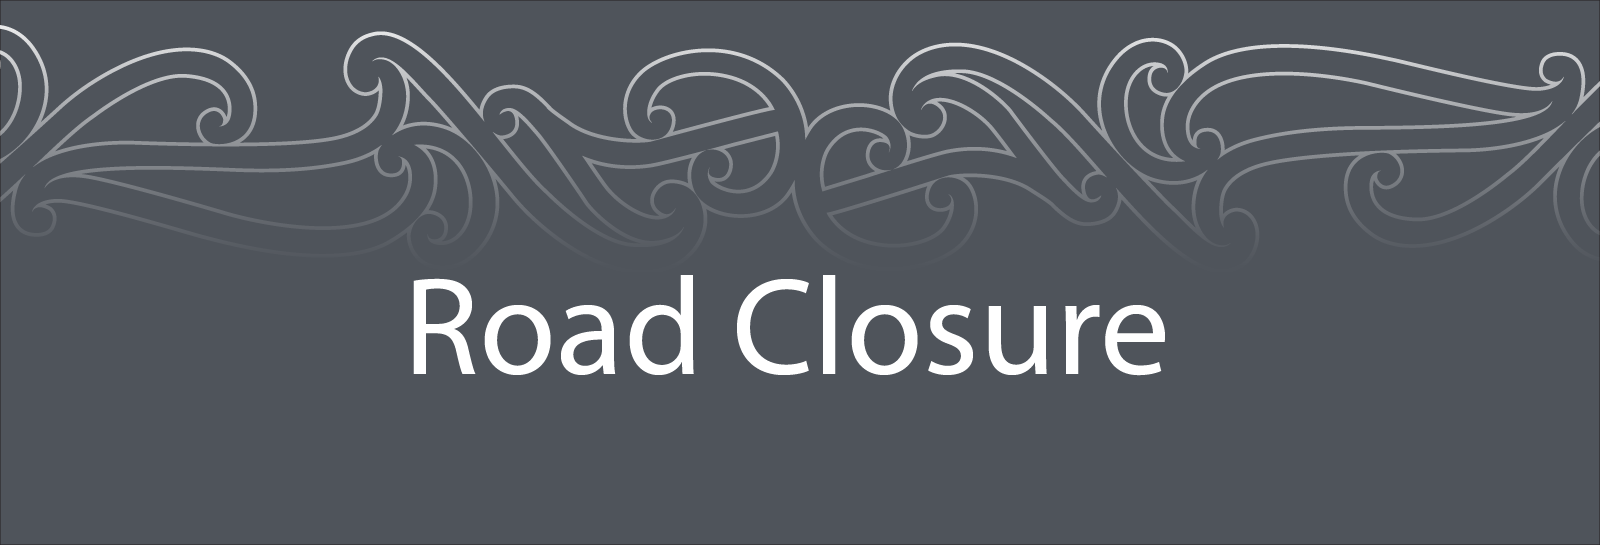 Road closure banner image